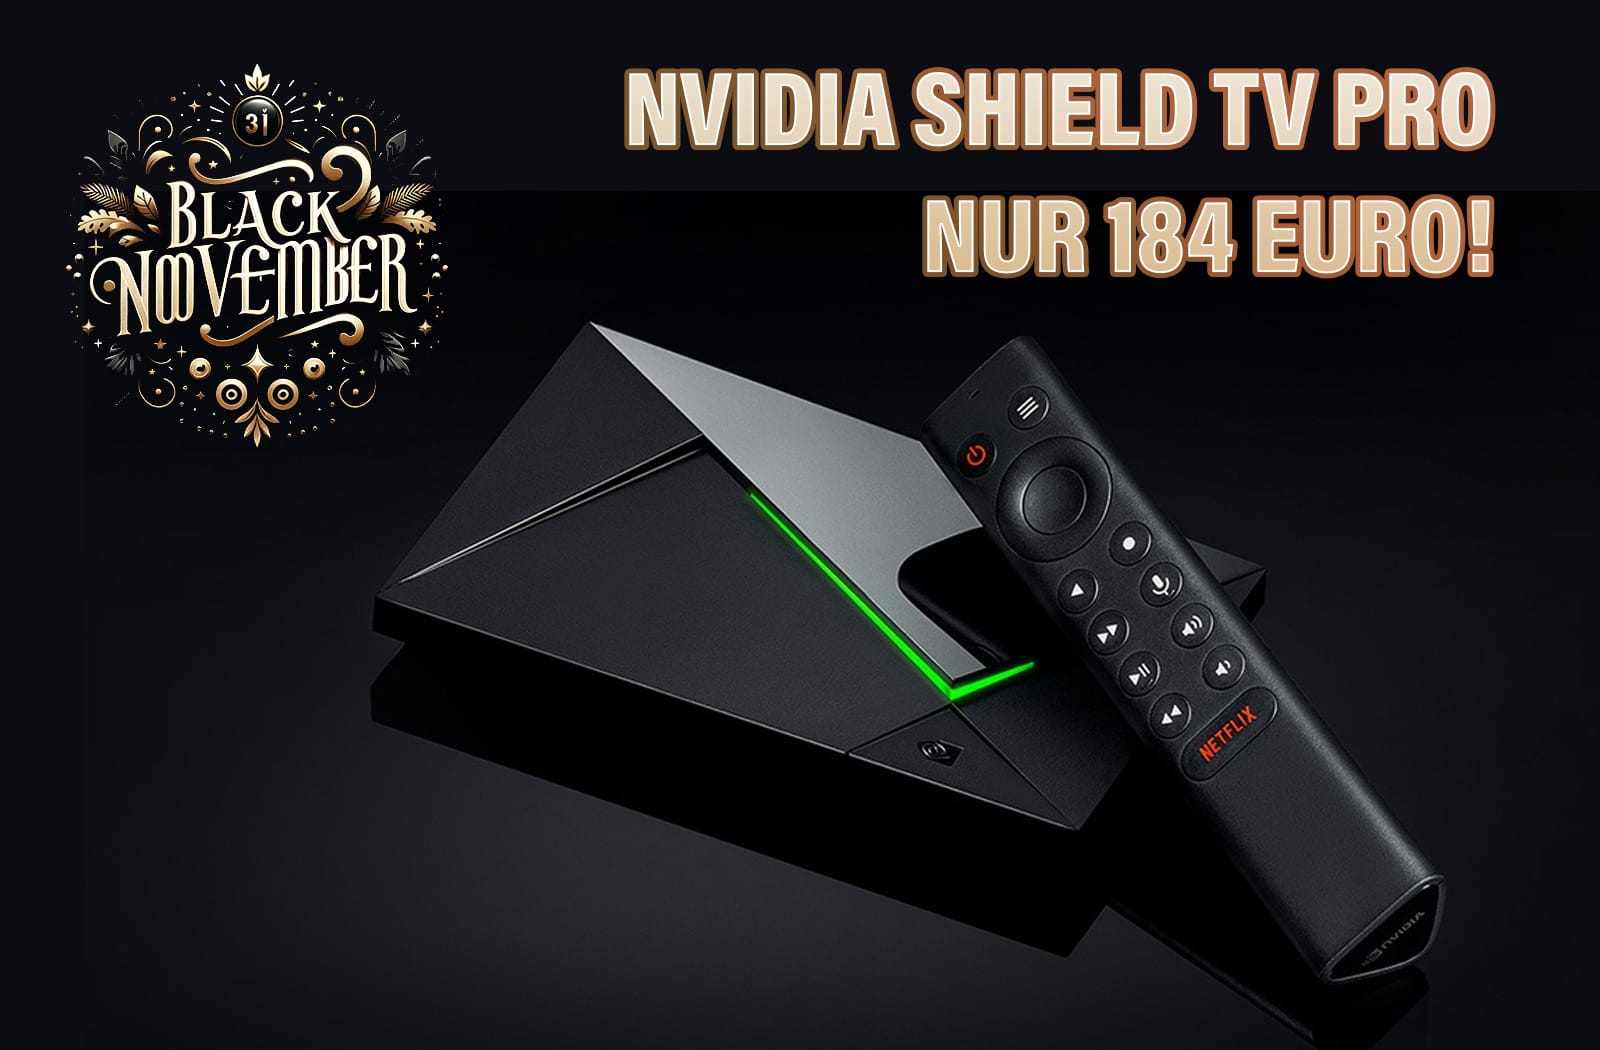 reduziert Preis der Nvidia Shield Pro auf 184 Euro - 4K Filme